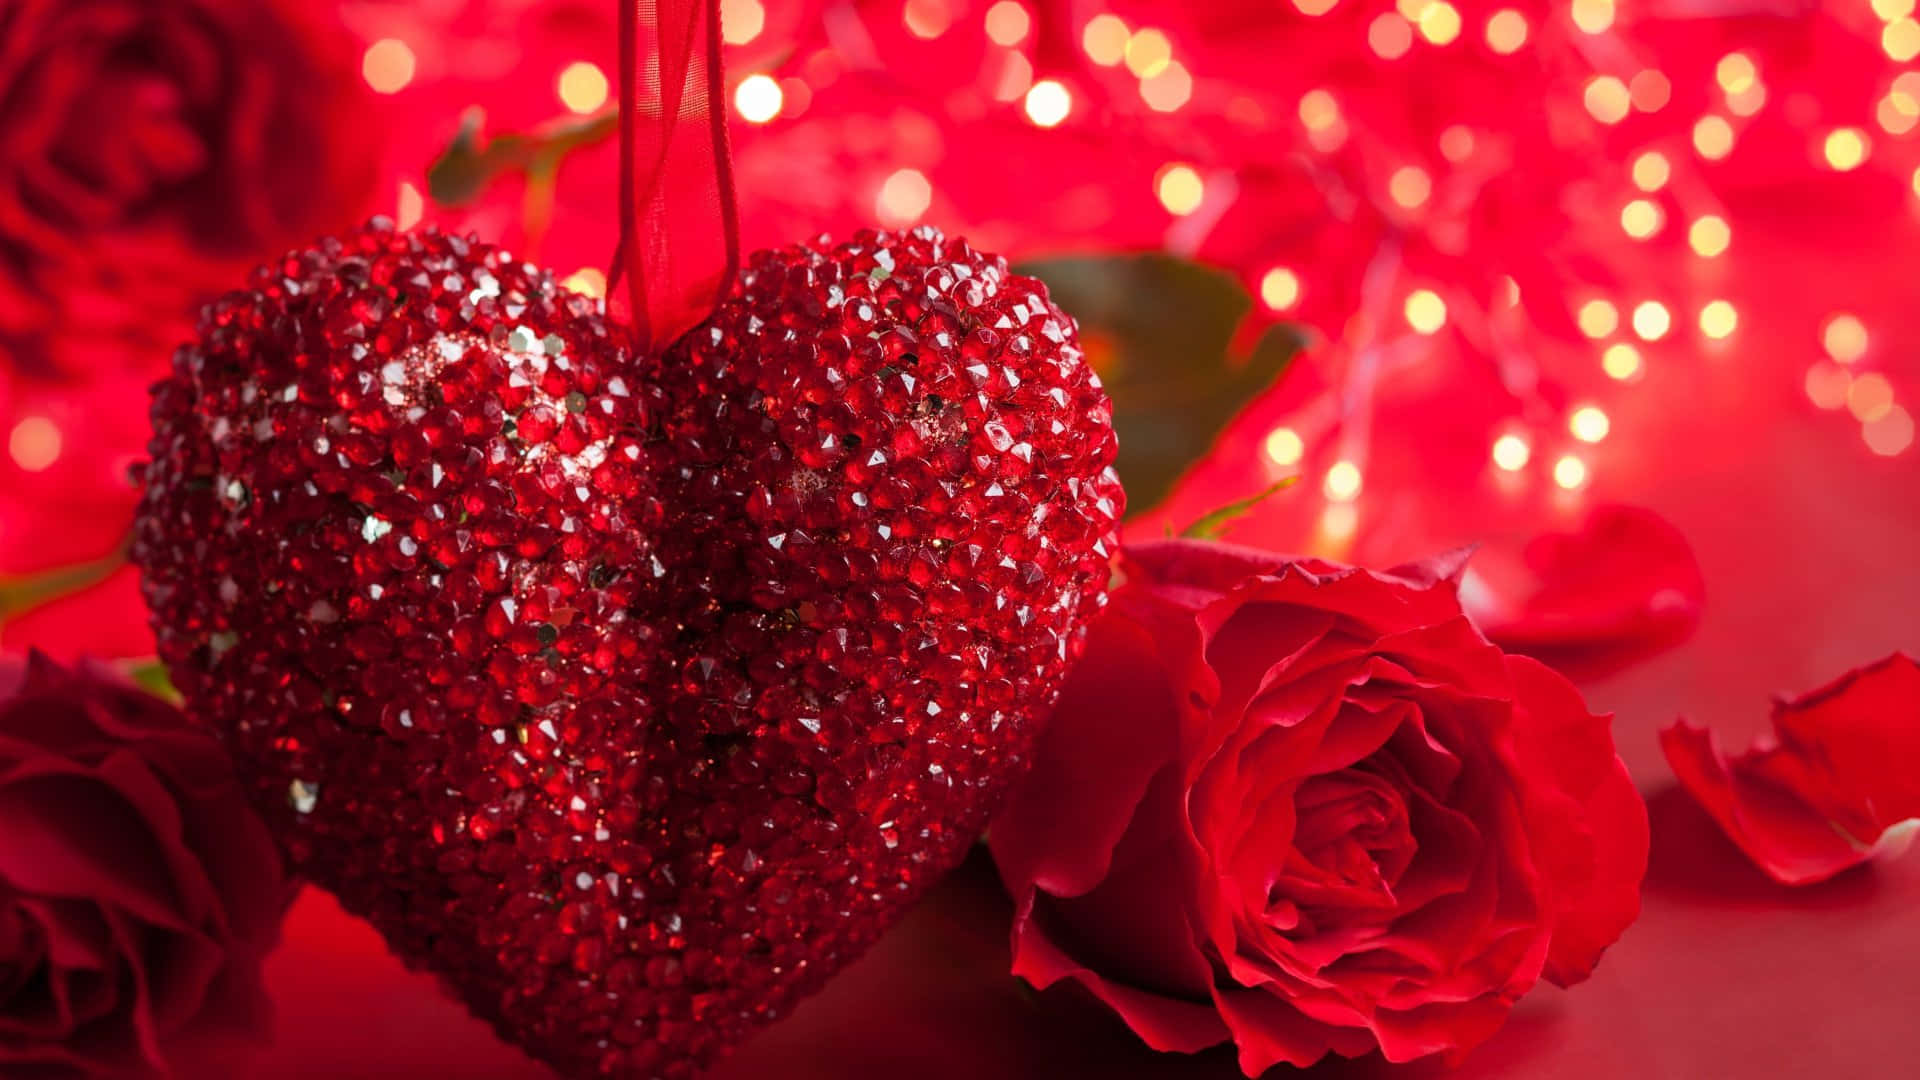 Caption: Romantic Rose Heart Wallpaper